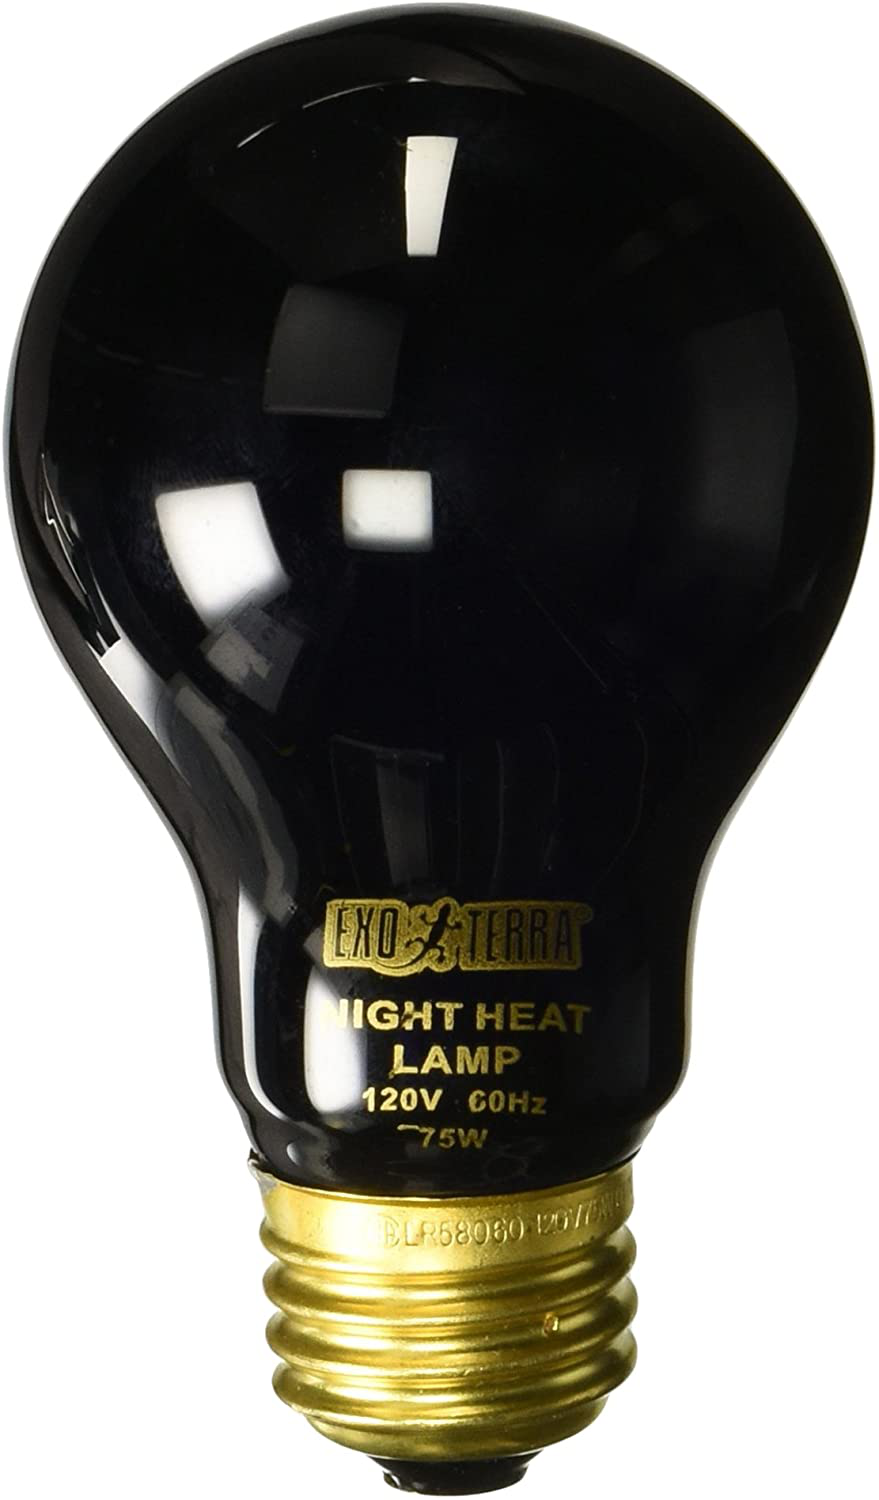 Exo Terra Night Glo Moonlight Heat Lamp, T10 Reptile Terrarium Light Bulb, 40 Watts, PT2124A1